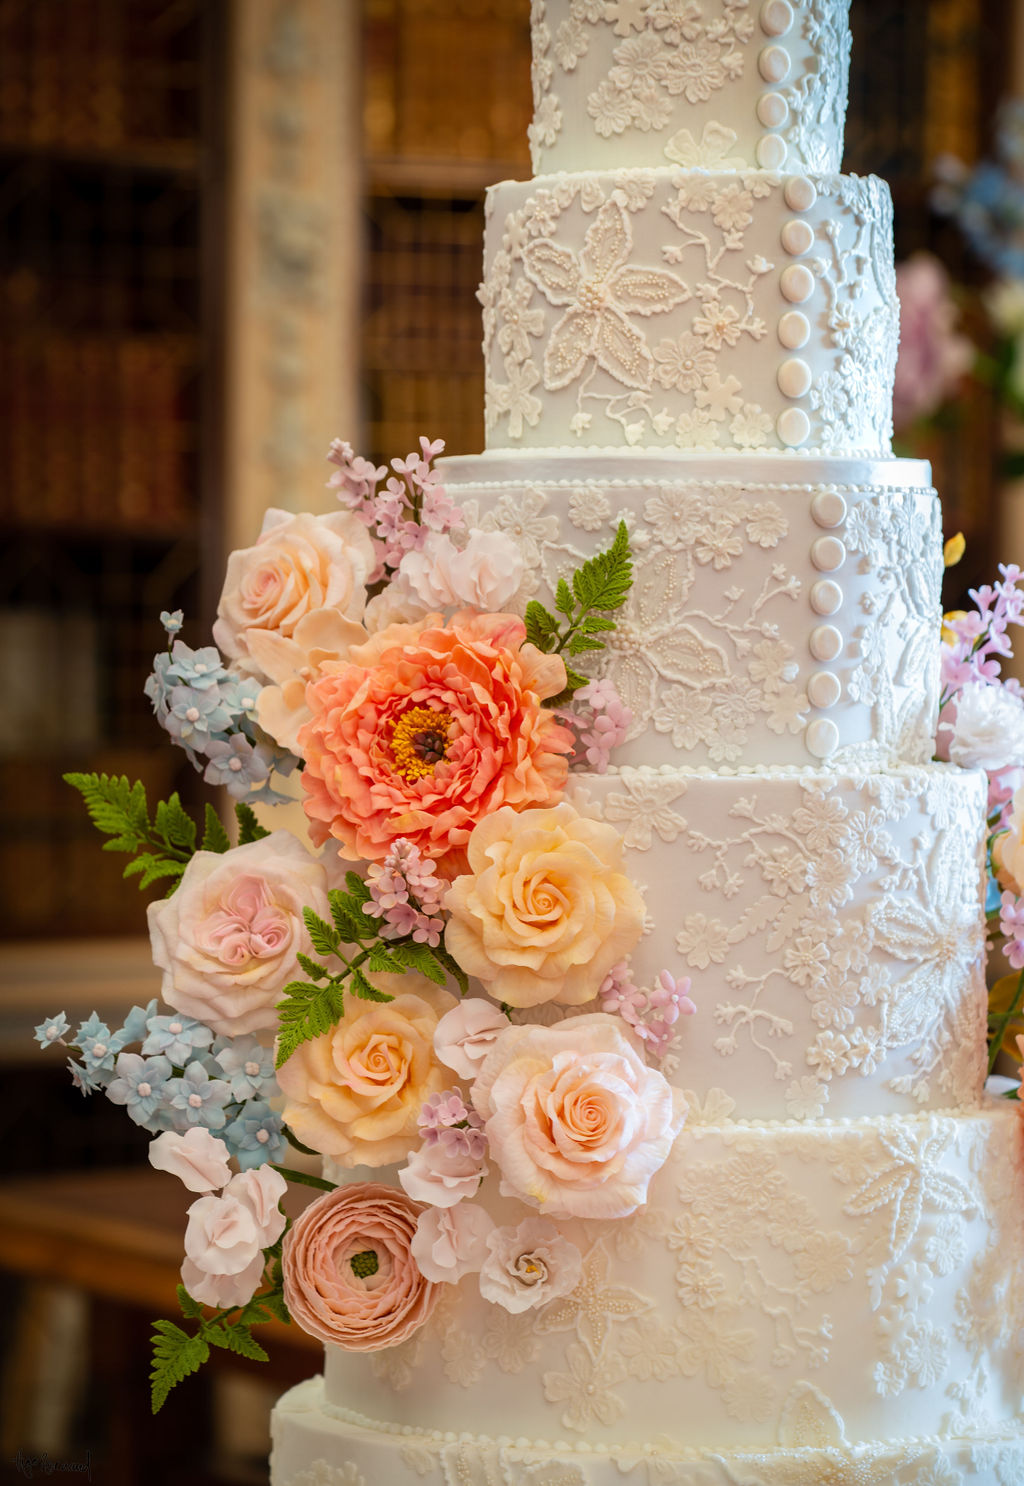 Details of Appliqué Lace & Pearls Luxury Wedding Cake By Yevnig